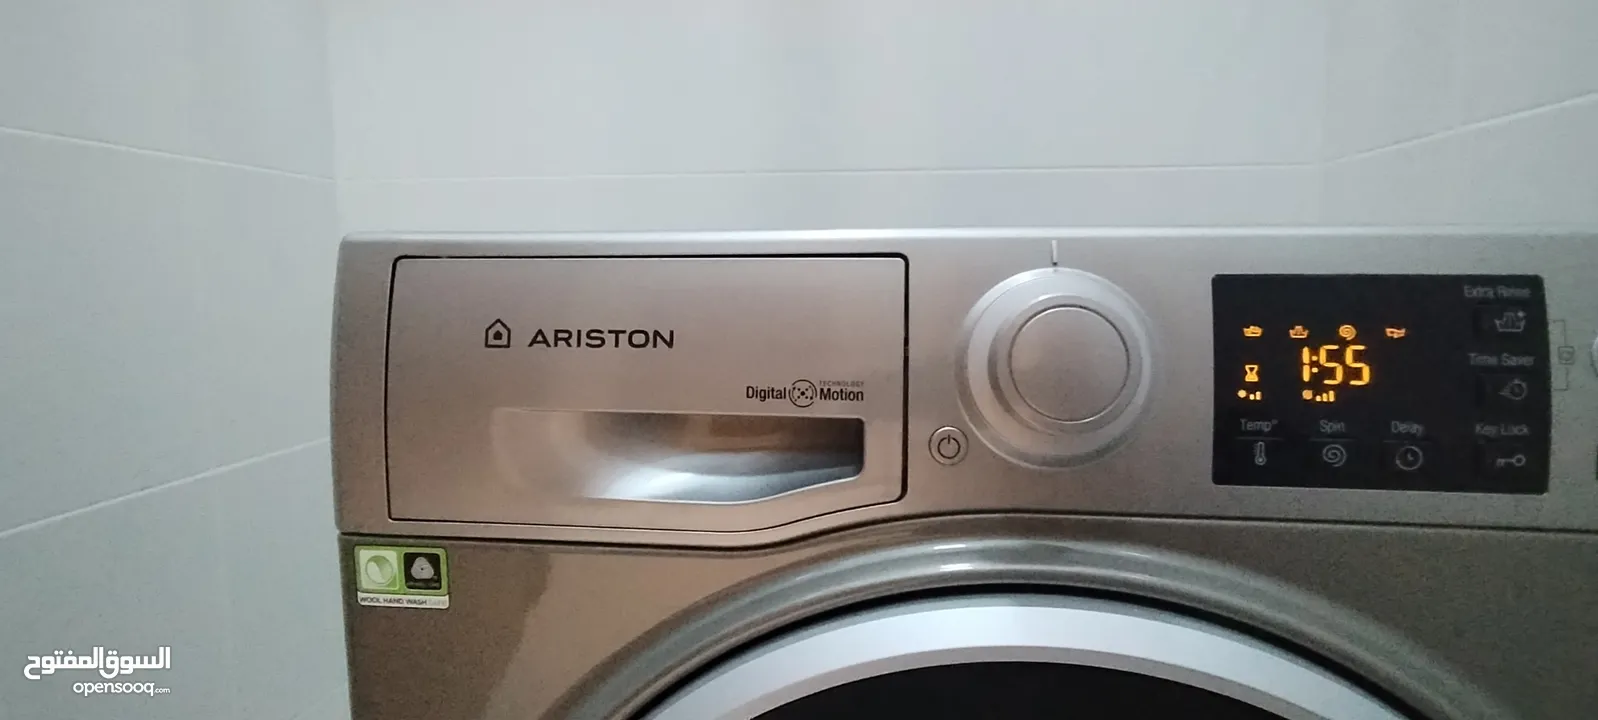 New washing machine not used no warranty غسالة ملابس جديده لم تستخدم الضمان مفقود